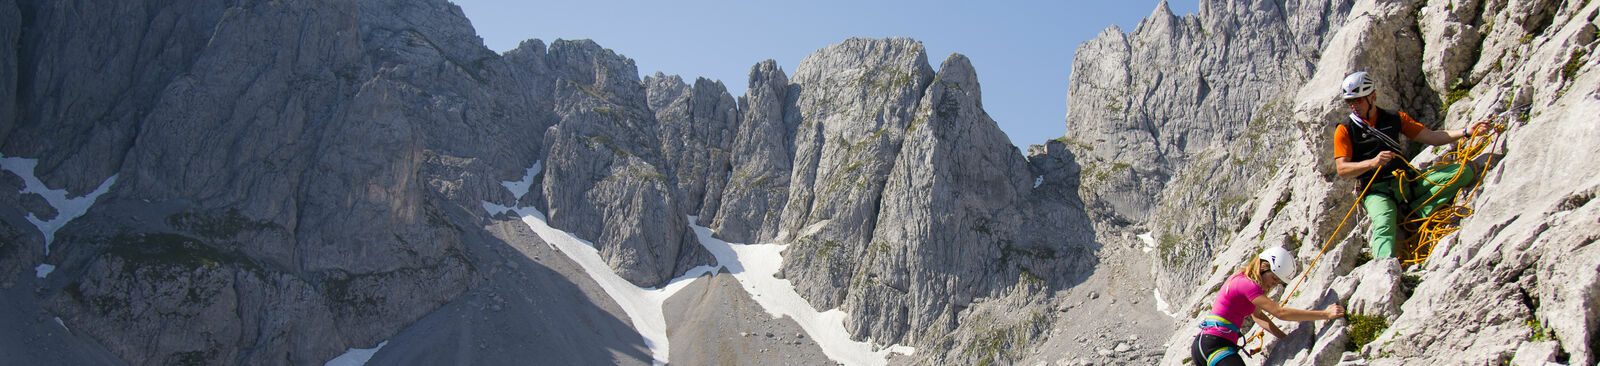 Klettertour auf dem Wilden Kaiser in St. Johann in Tirol